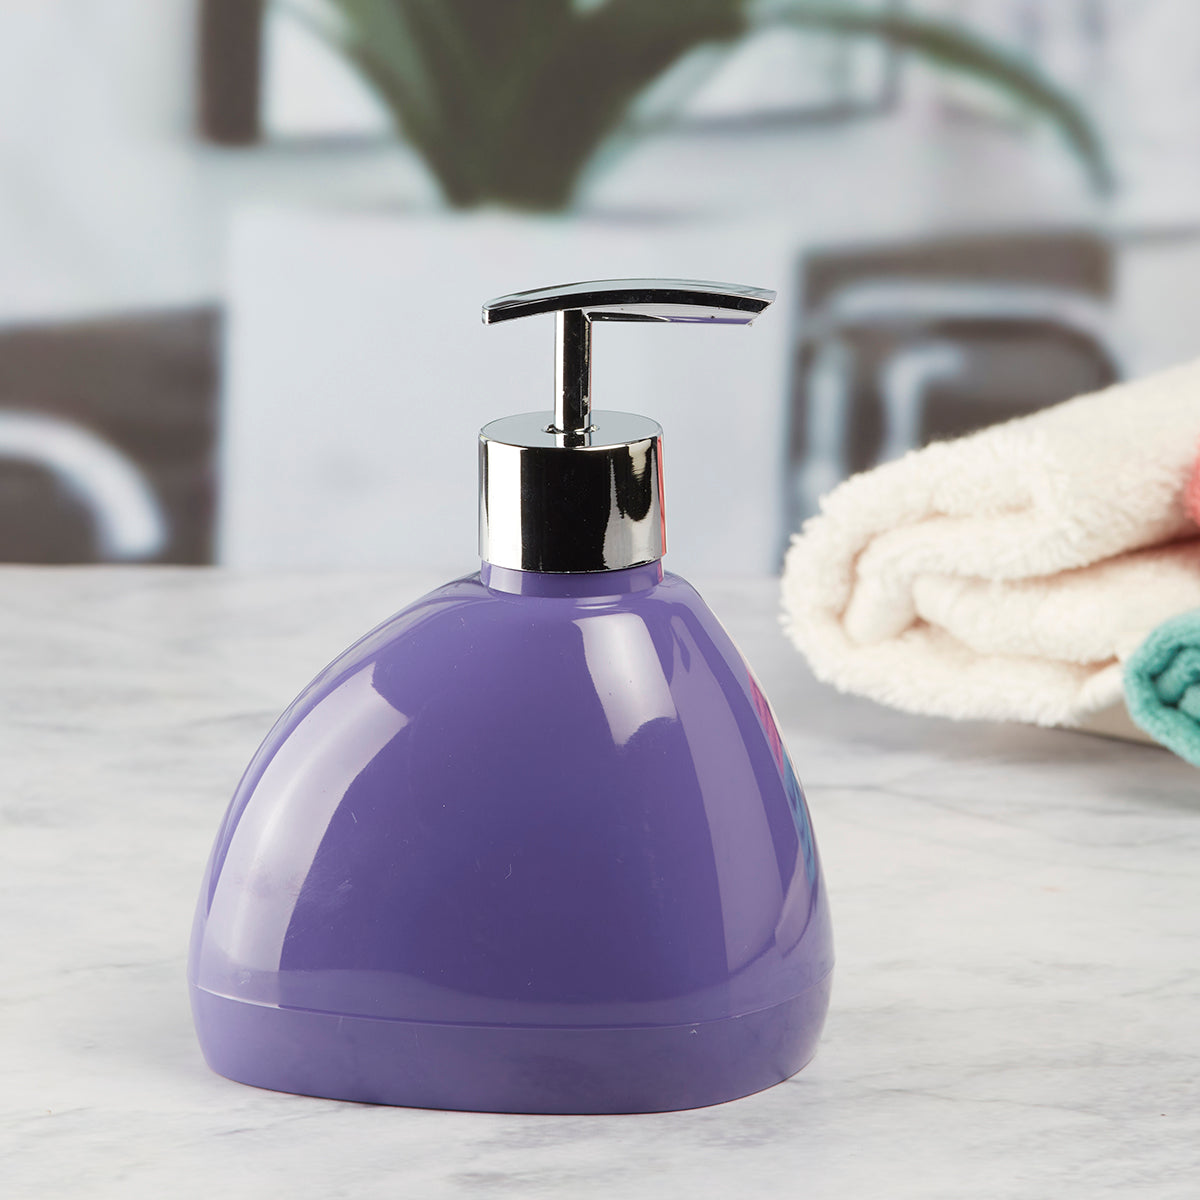 Acrylic Soap Dispenser Pump for Bathroom (8649)